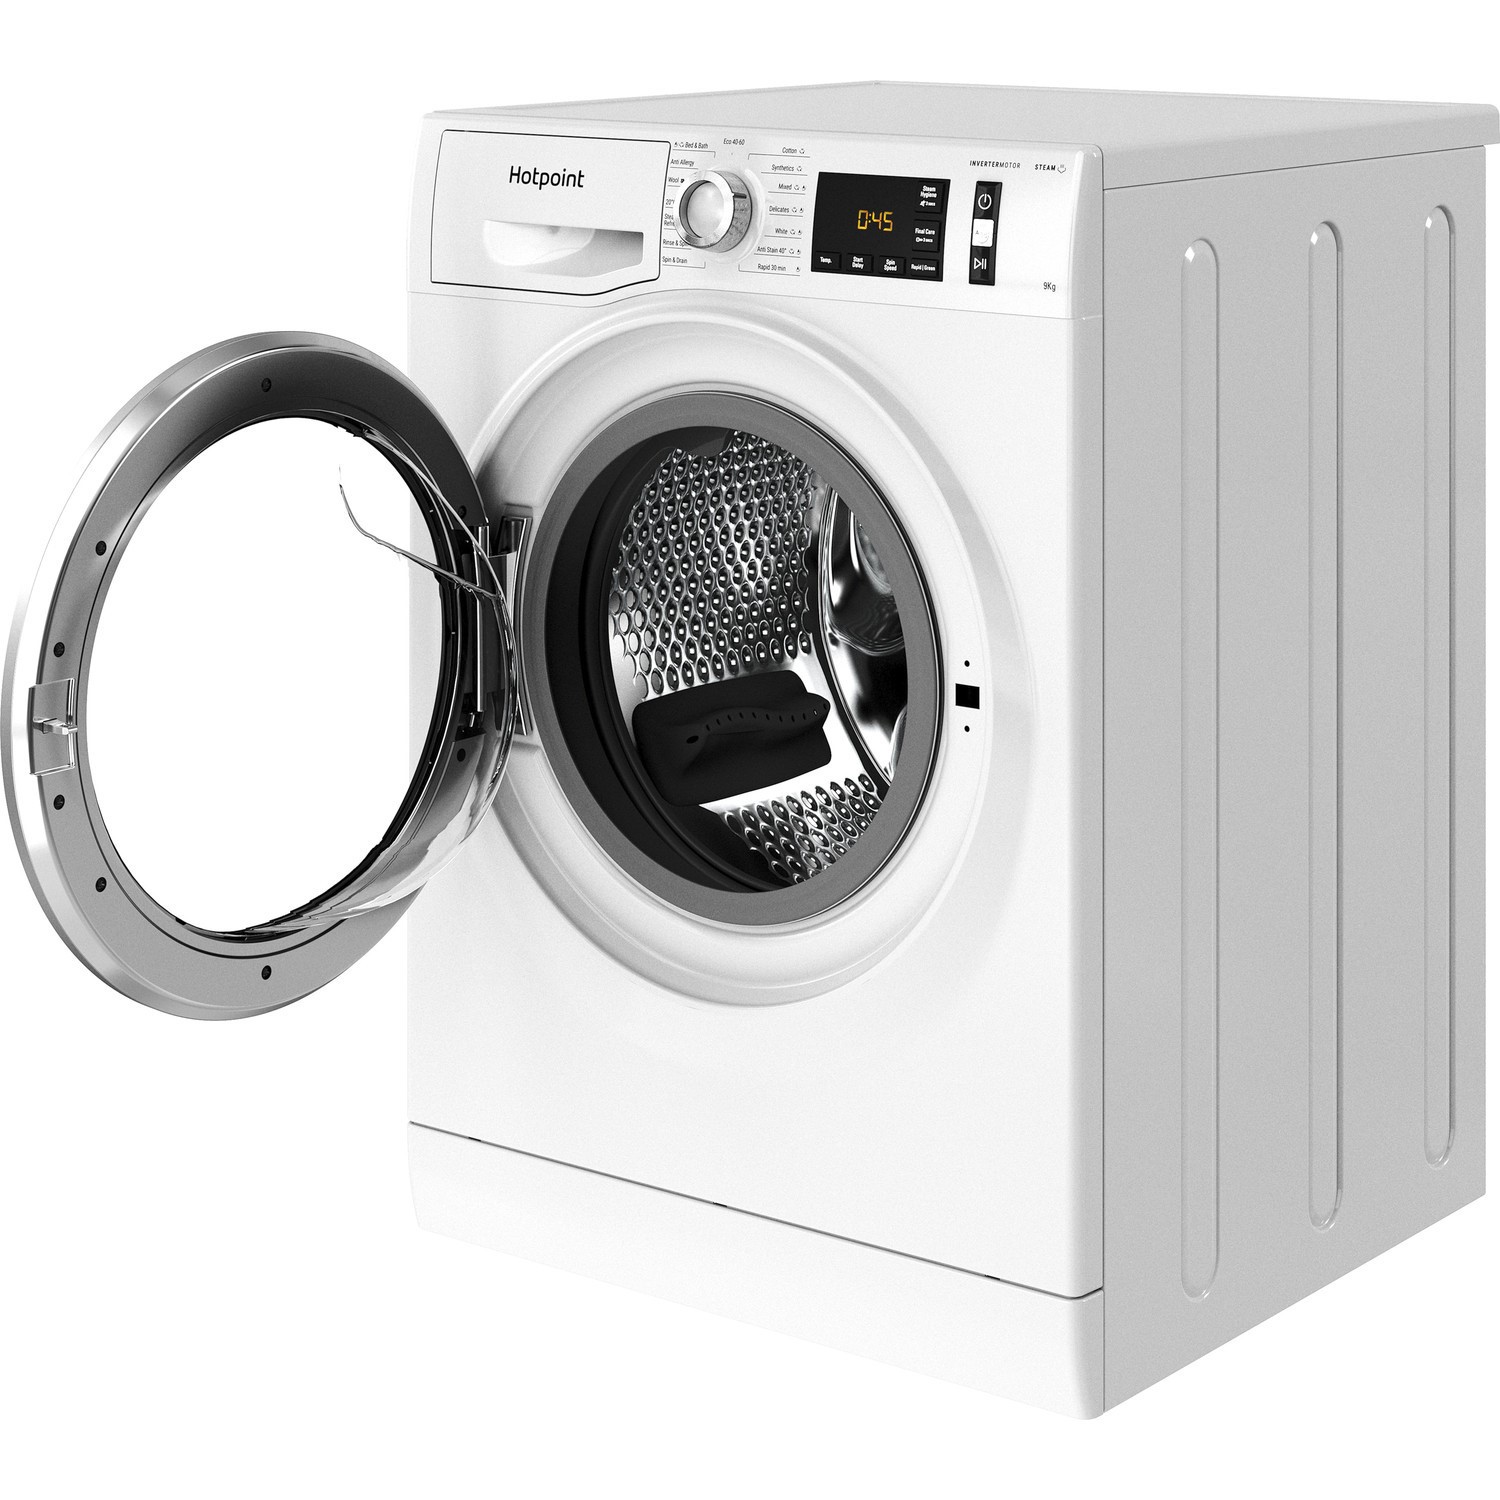 Hotpoint 9kg 1400rpm Washing Machine - White